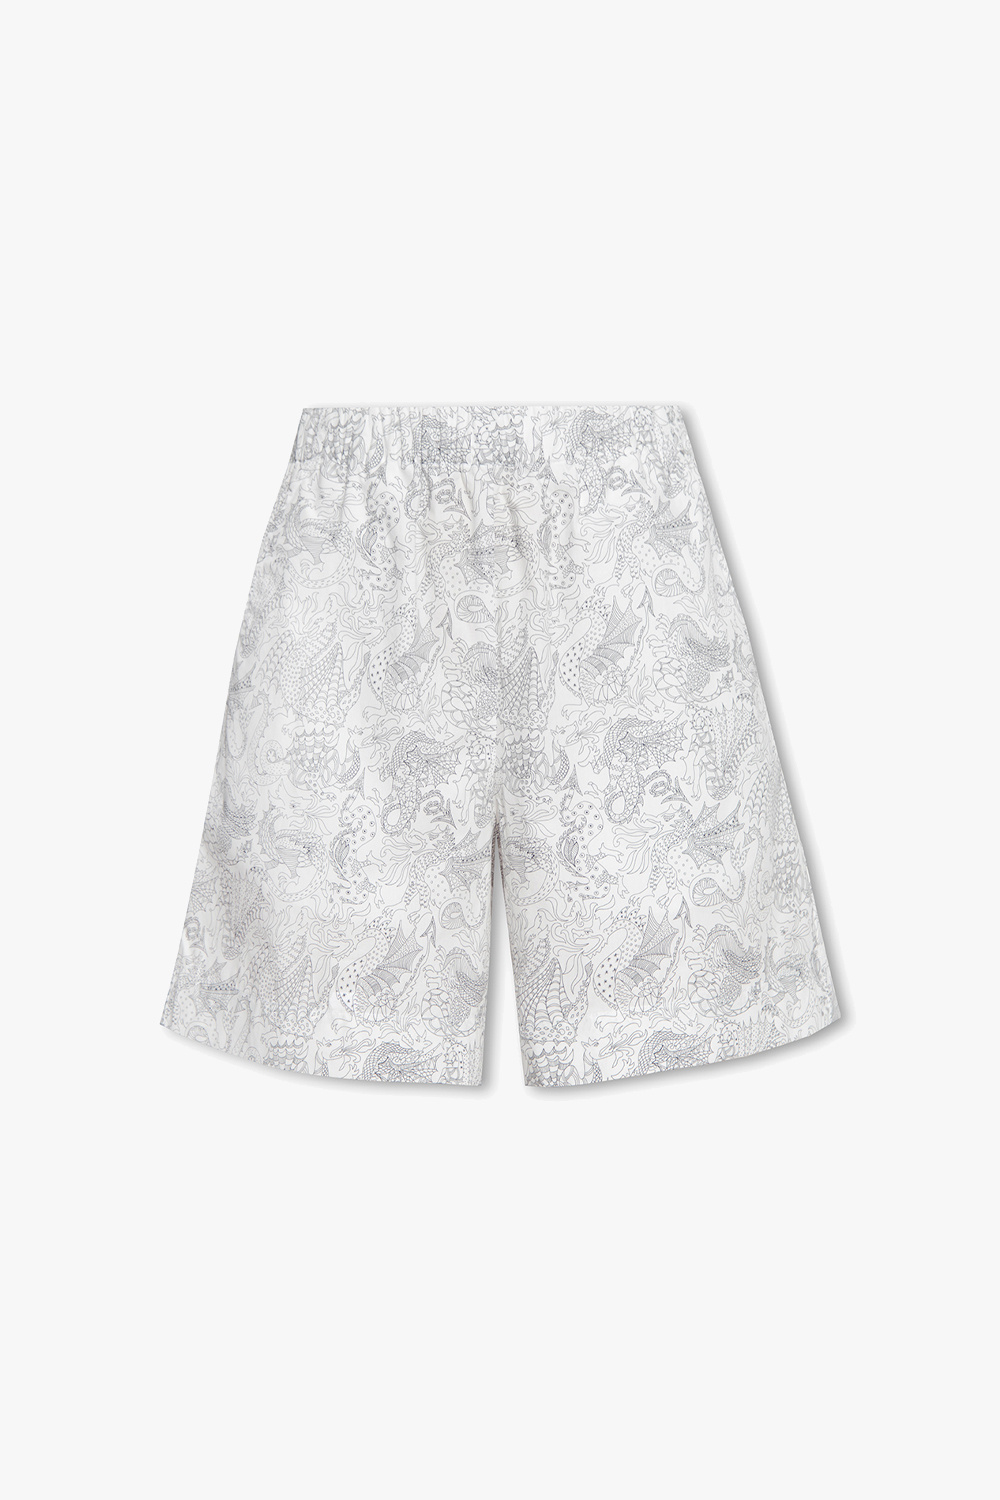 A.P.C. ‘Lucy’ cotton shorts